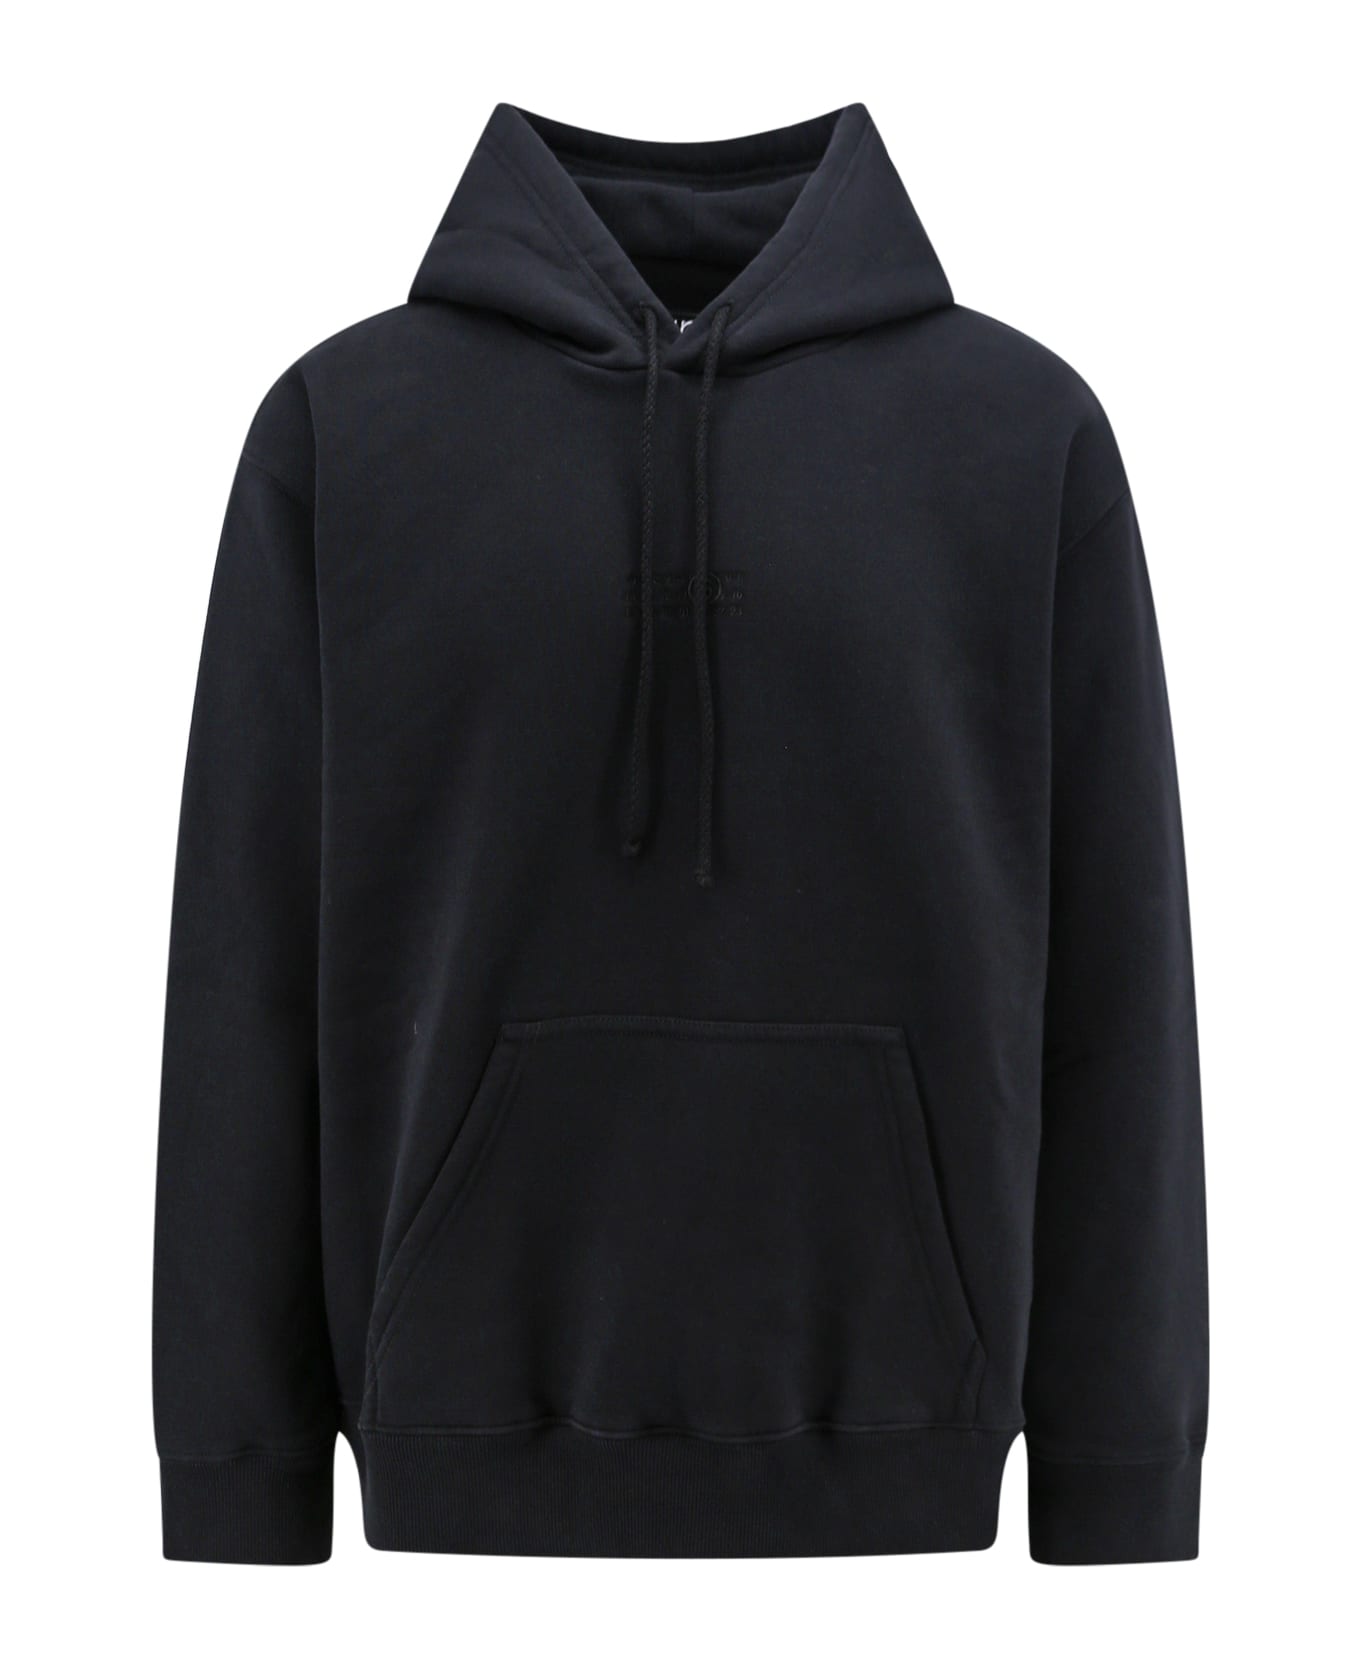 MM6 Maison Margiela Hooded Sweatshirt - Black